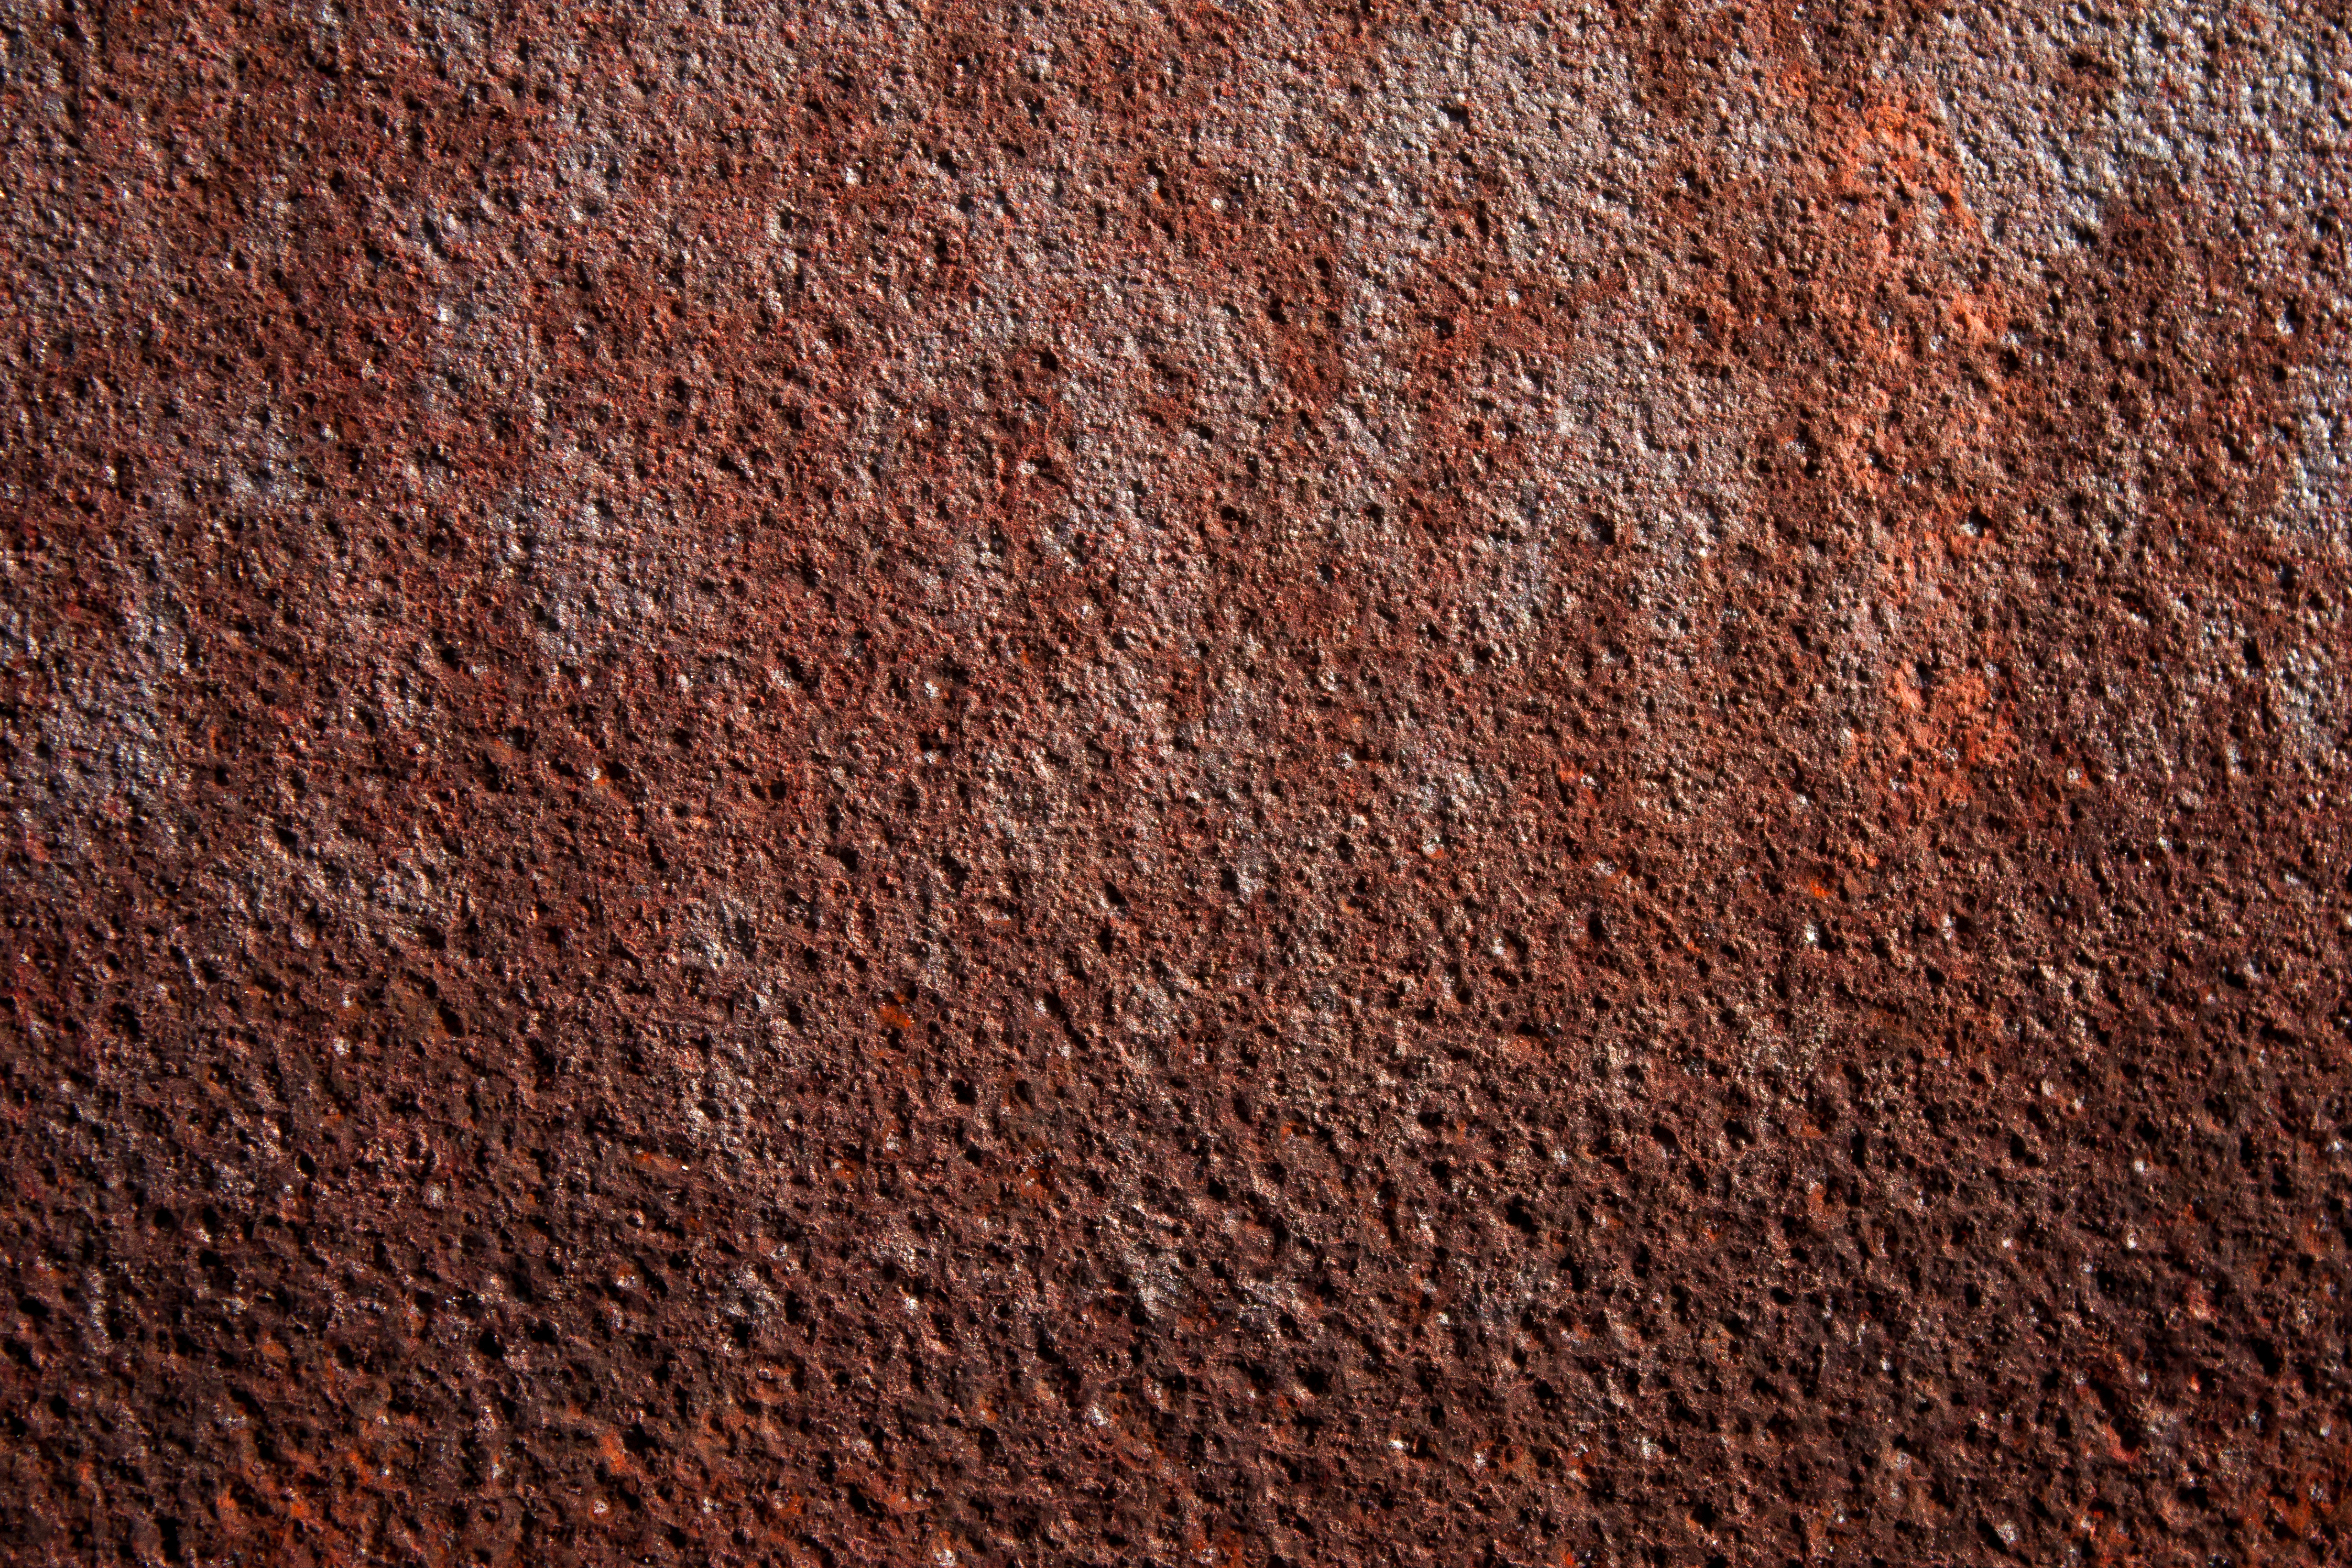 Rust Texture By DesignerFied – DesignerFied.com